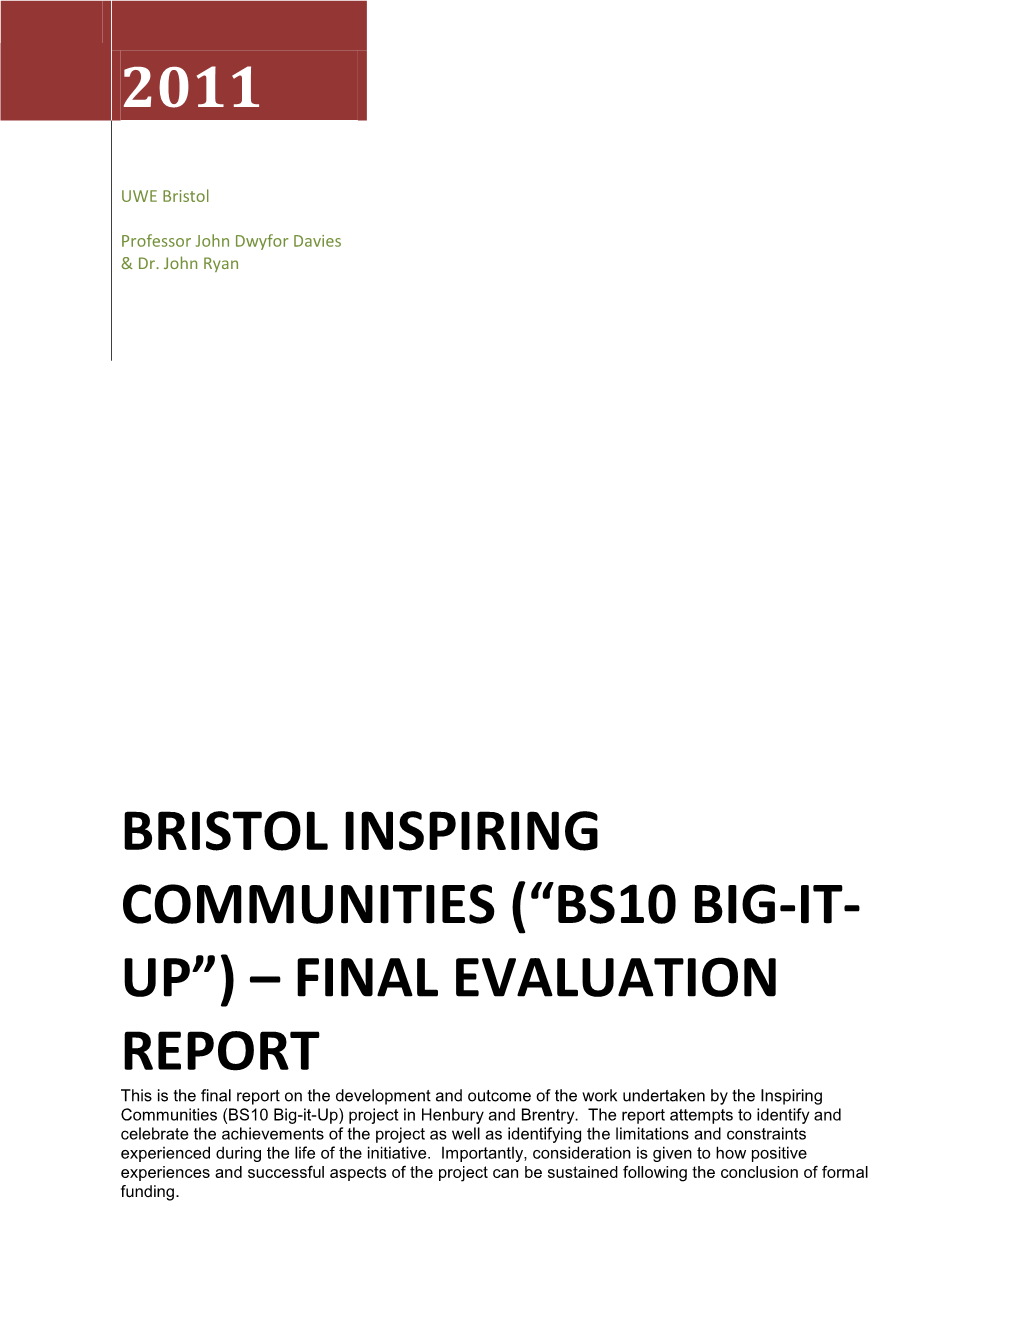 Bristol INSPIRING COMMUNITIES